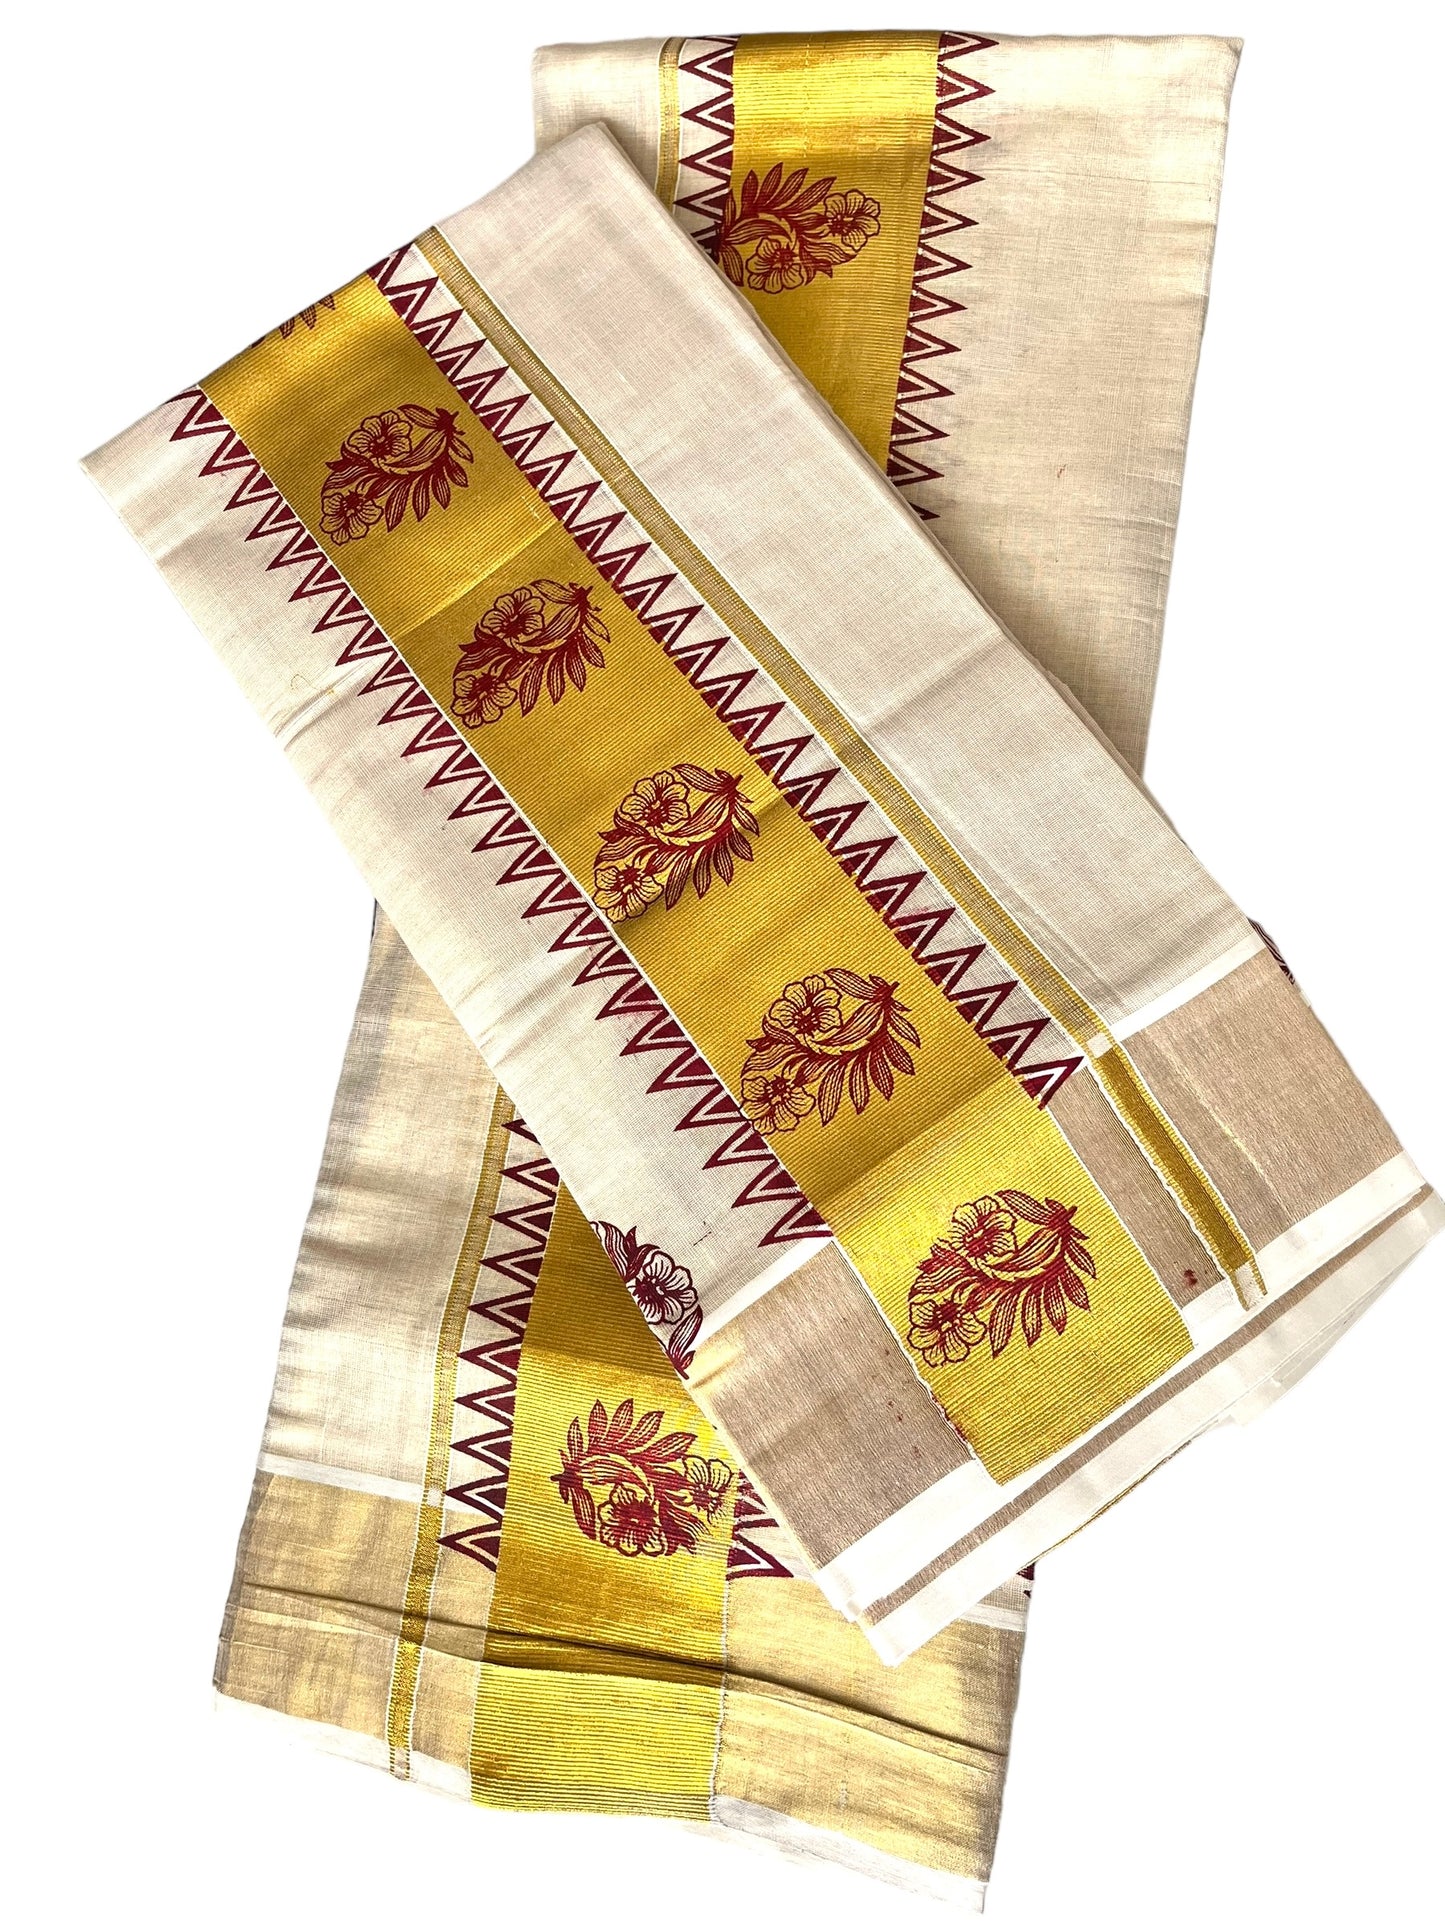 Kerala Traditional set Mundu Tissue dark red flowers print in gold kasavu| Onam Vishu Mundum Neriyathum| Petelz| Indian  Saree| Janmashtami